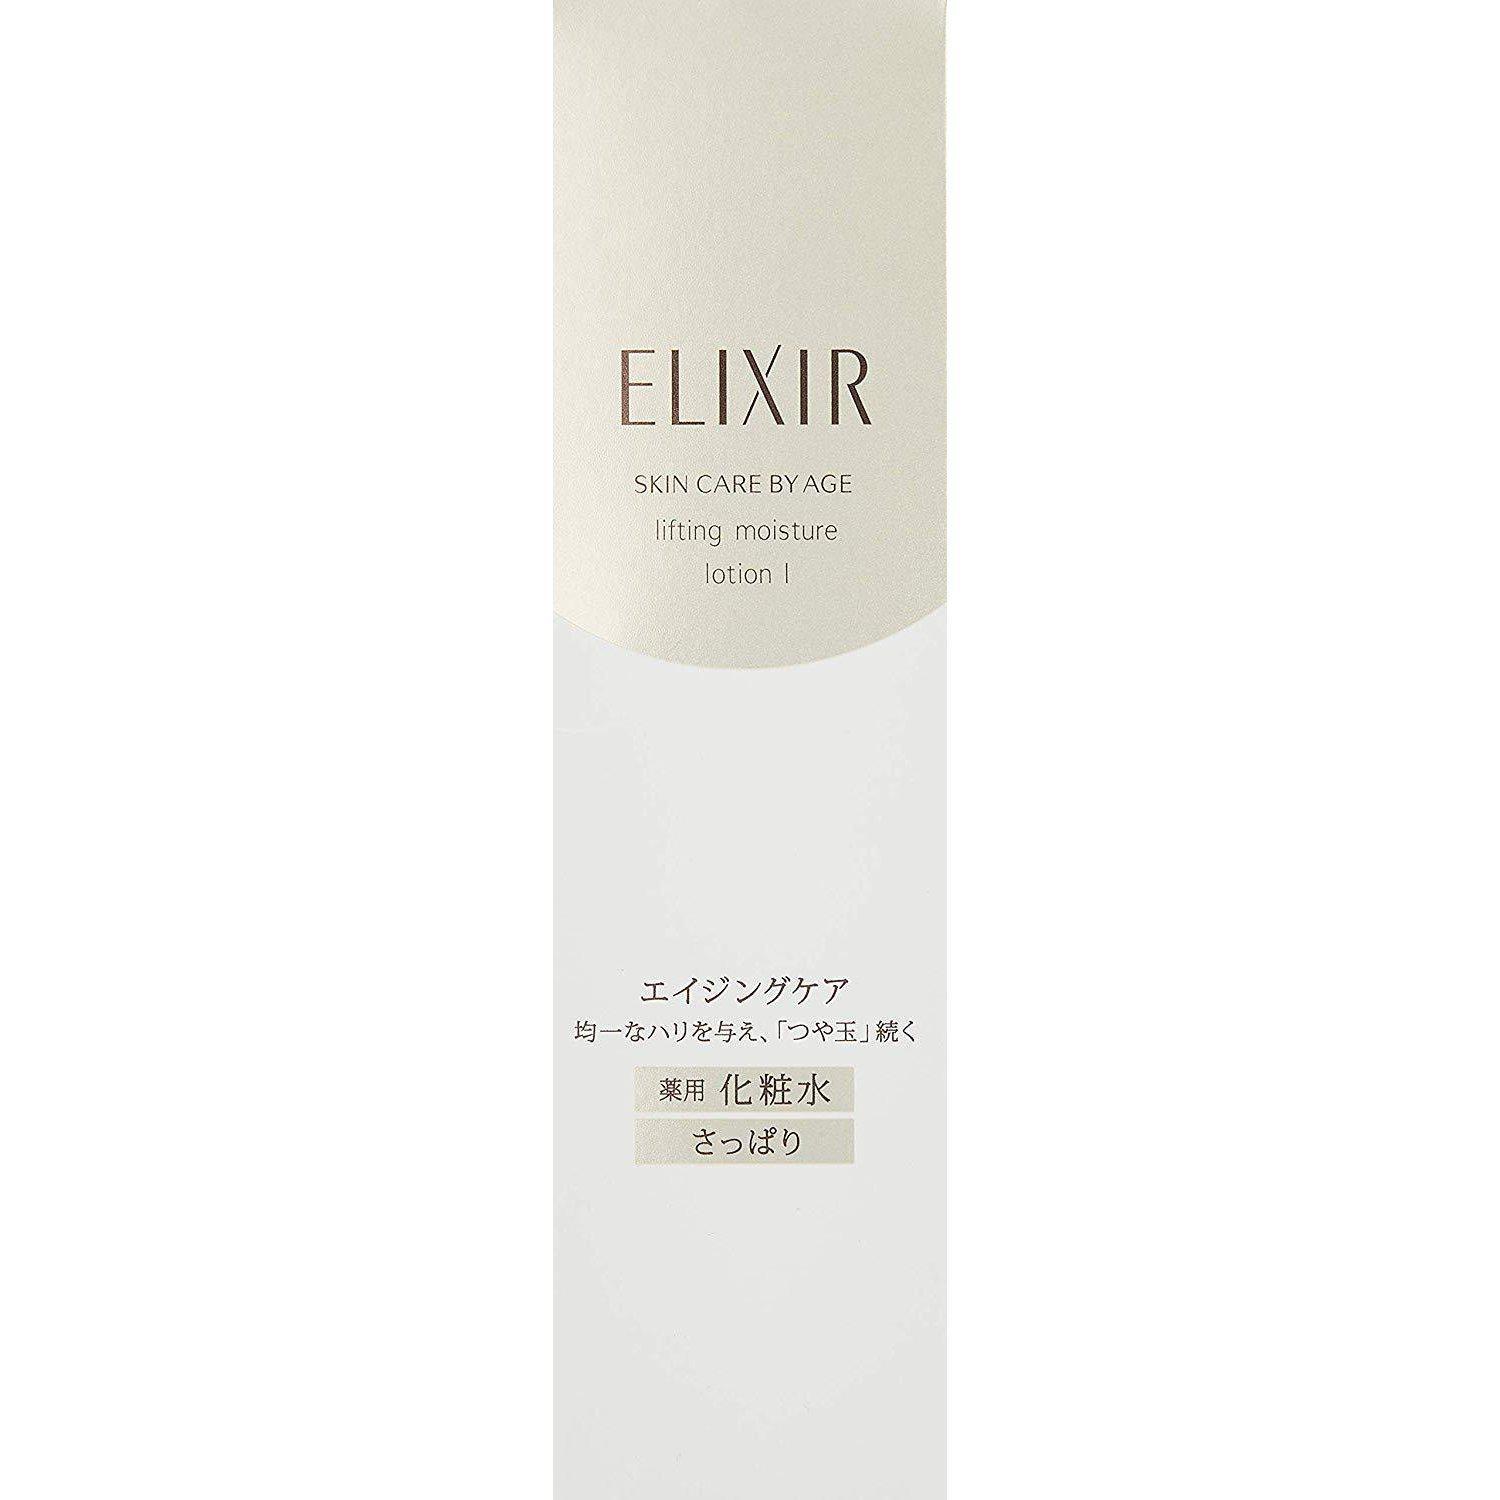 Shiseido ELIXIR Superieur Lifting Moisture Lotion I